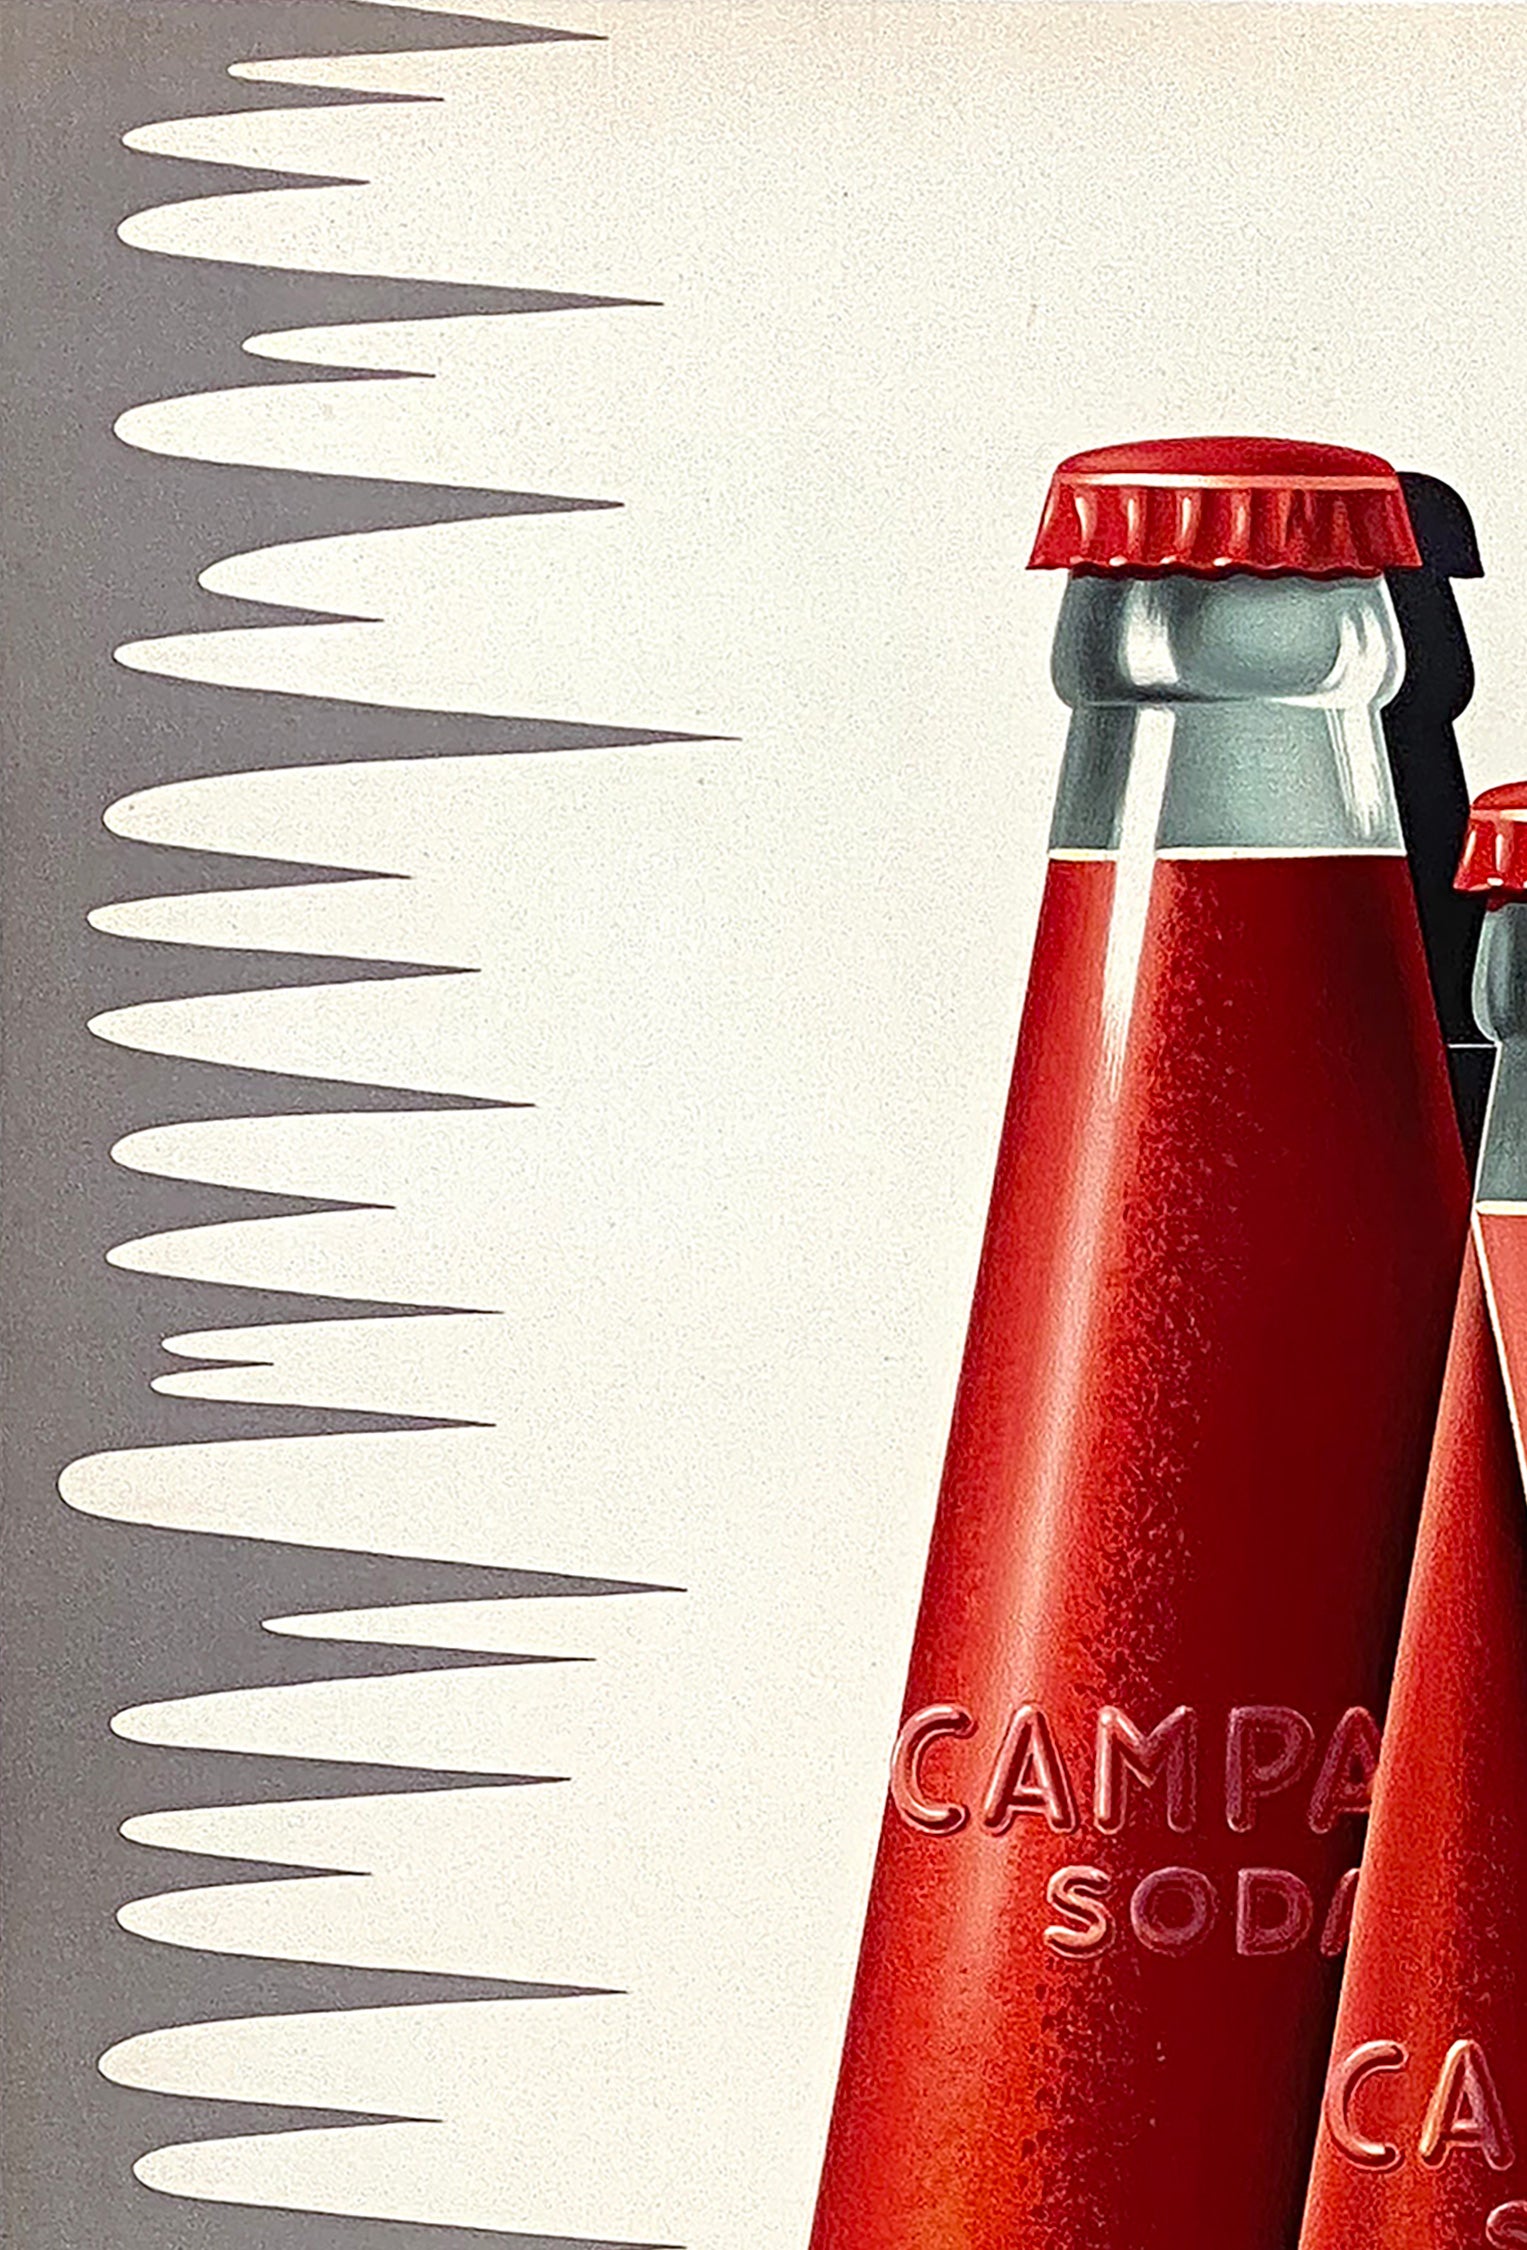 Campari Soda 1950 Vintage Italian Alcohol Adversting Poster